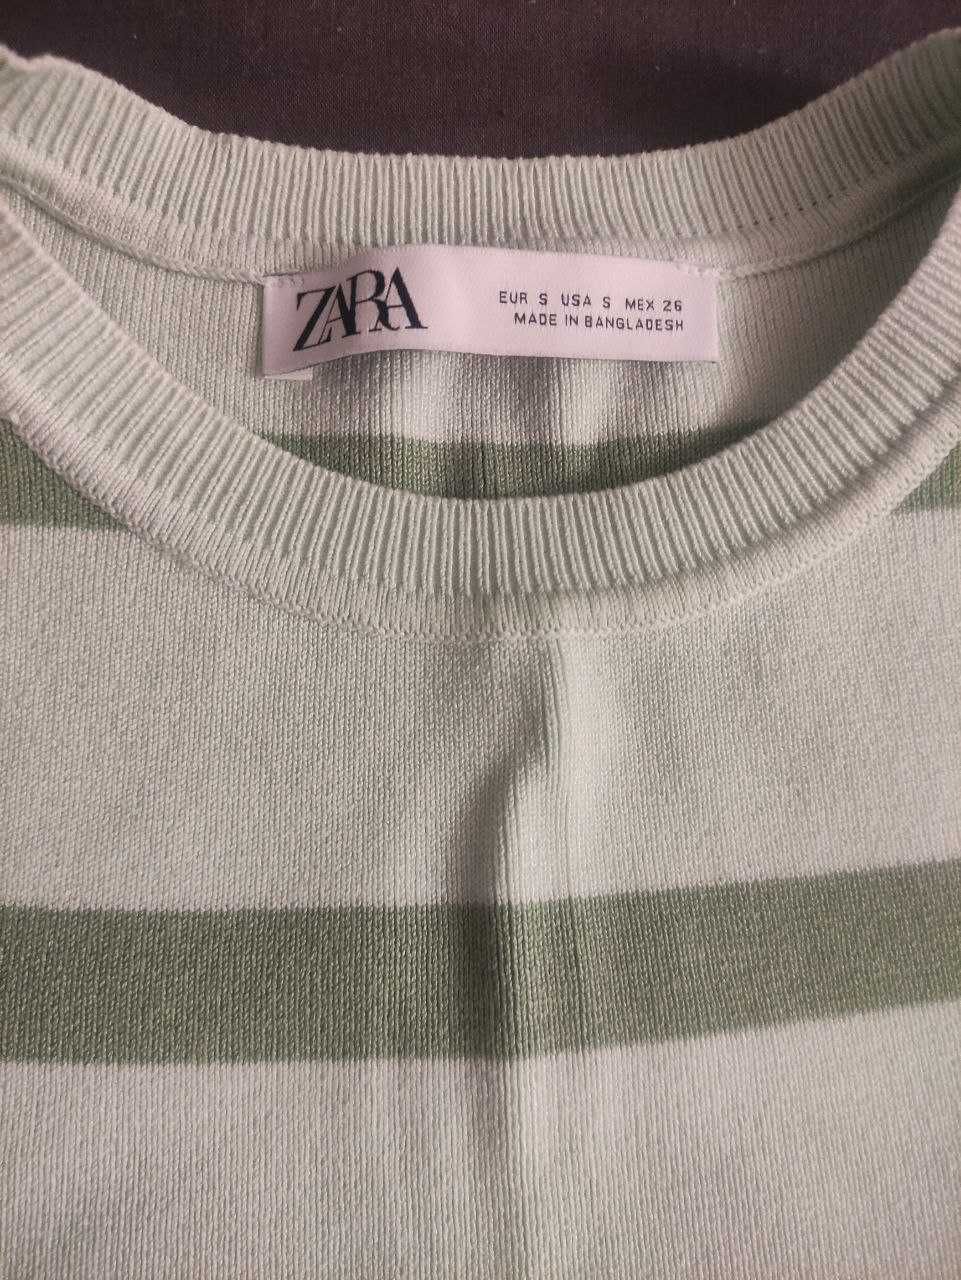 Zara new cotton top